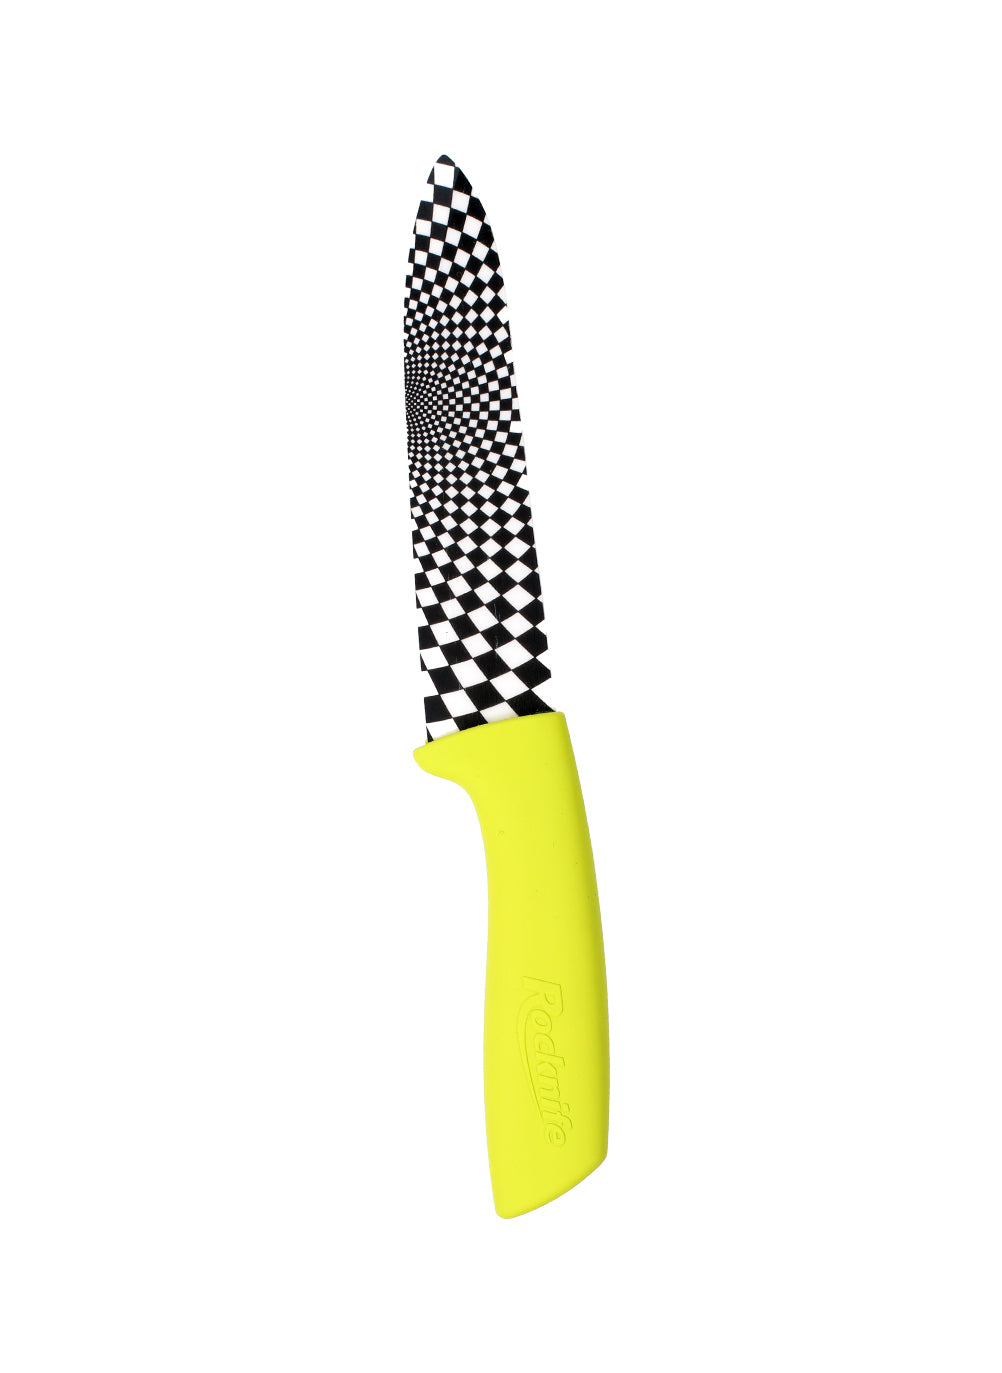 6 Inch Ceramic Kitchen Knife - Lime Green – Rocknife